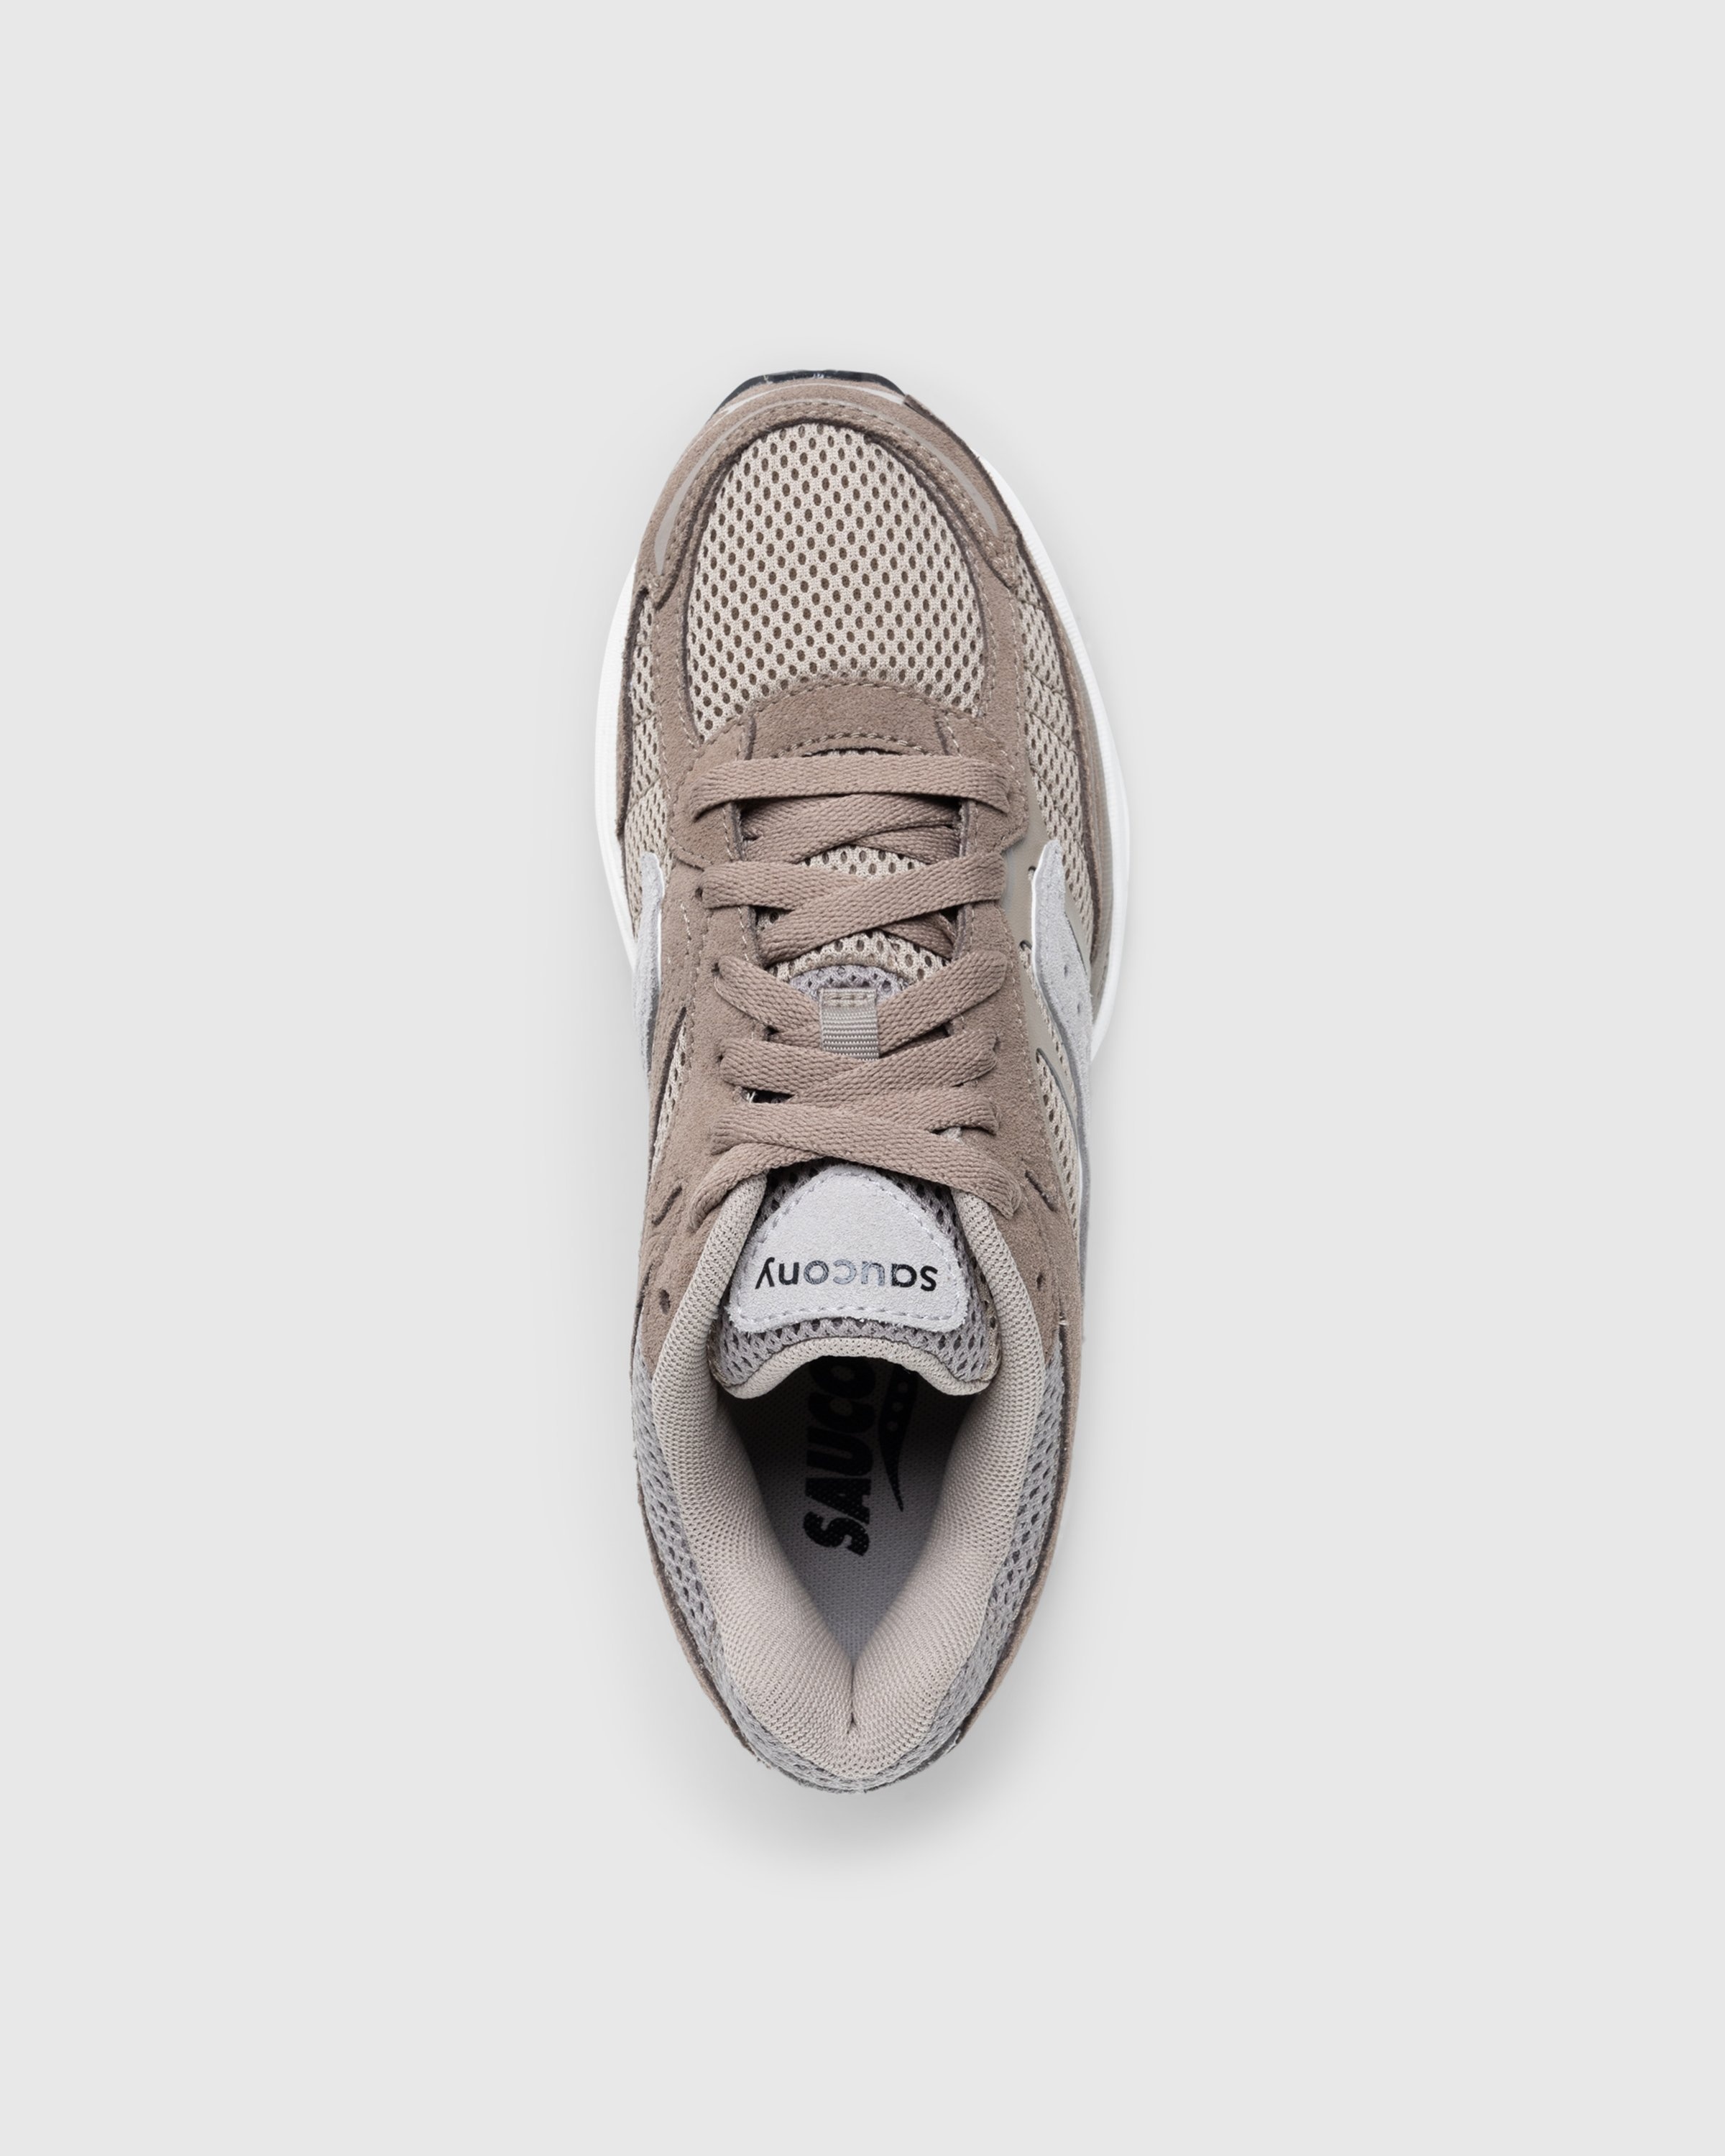 Saucony – ProGrid Omni 9 Premium Greige - Low Top Sneakers - Grey - Image 5